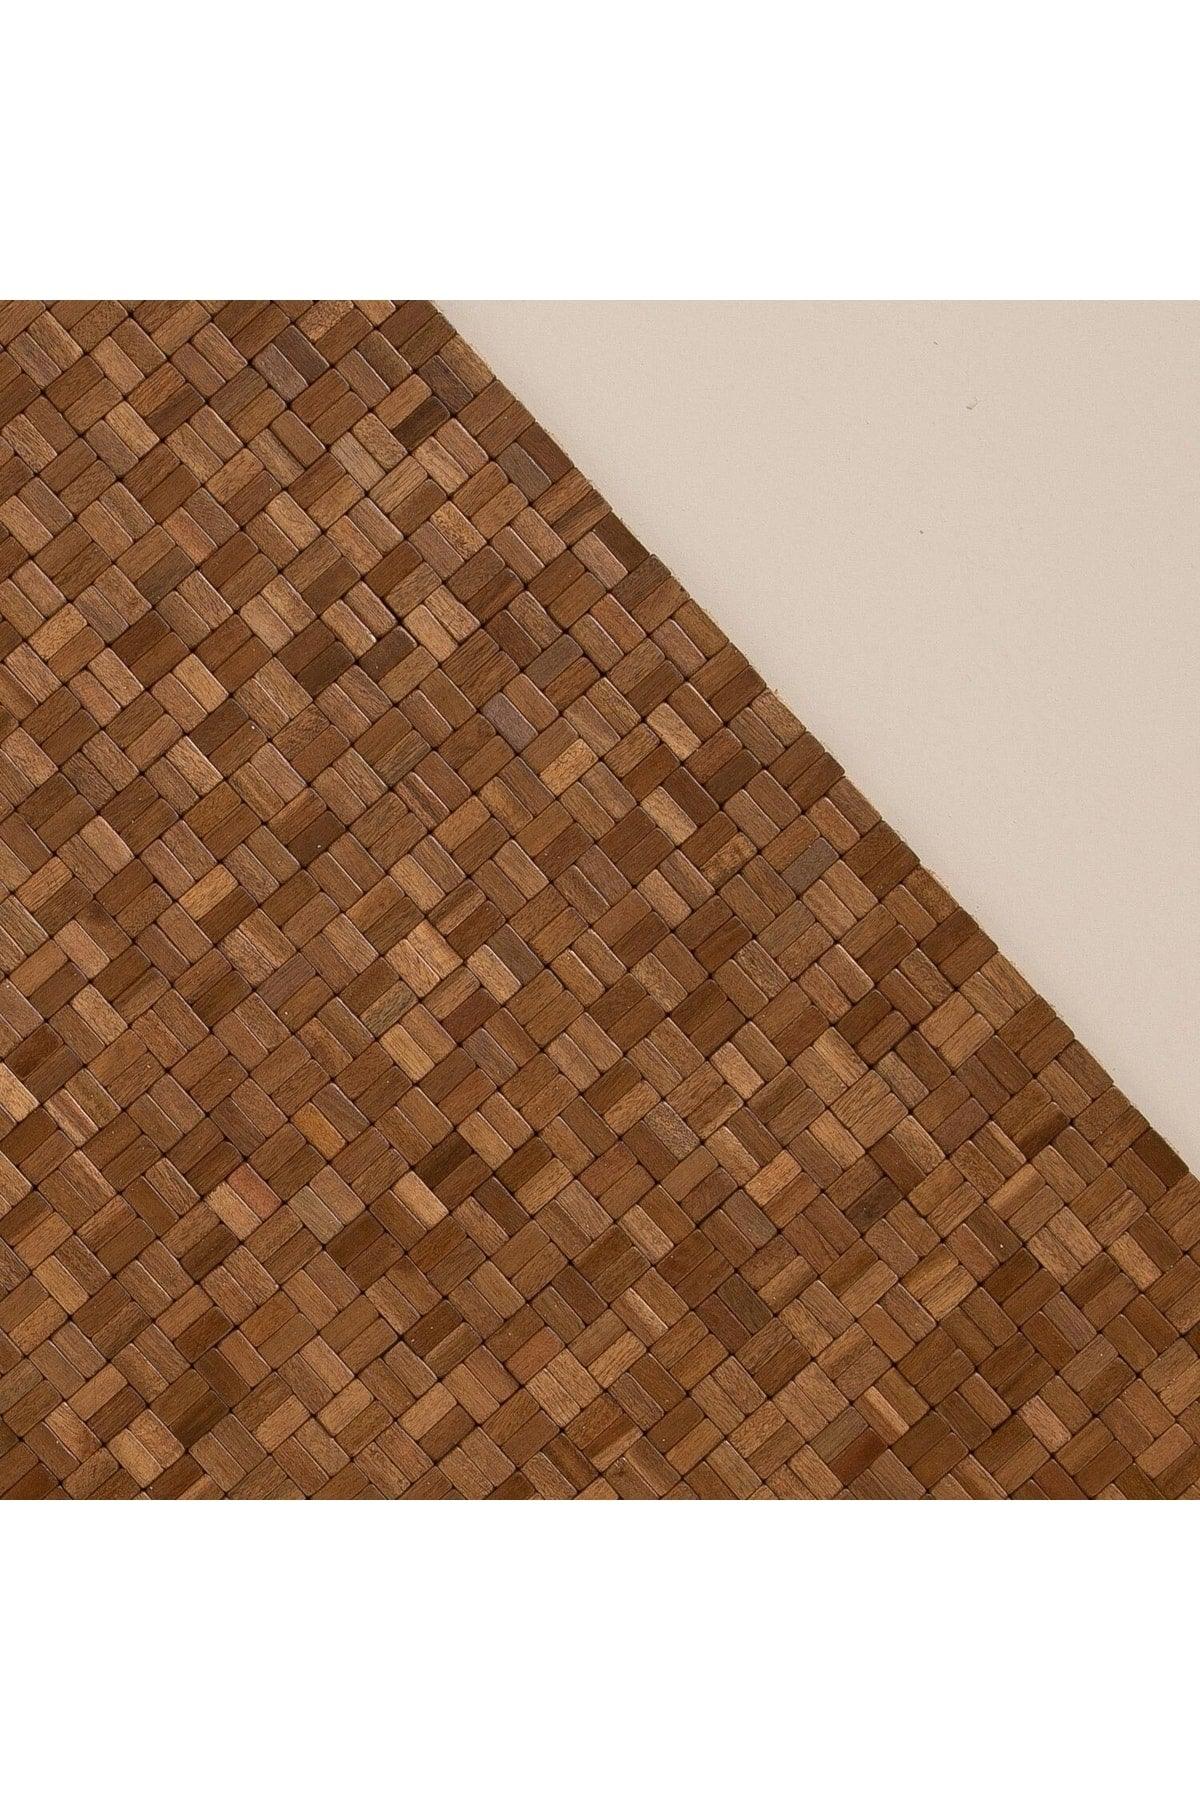 Penta Wooden Mat 70 X 130 Cm Natural - Swordslife